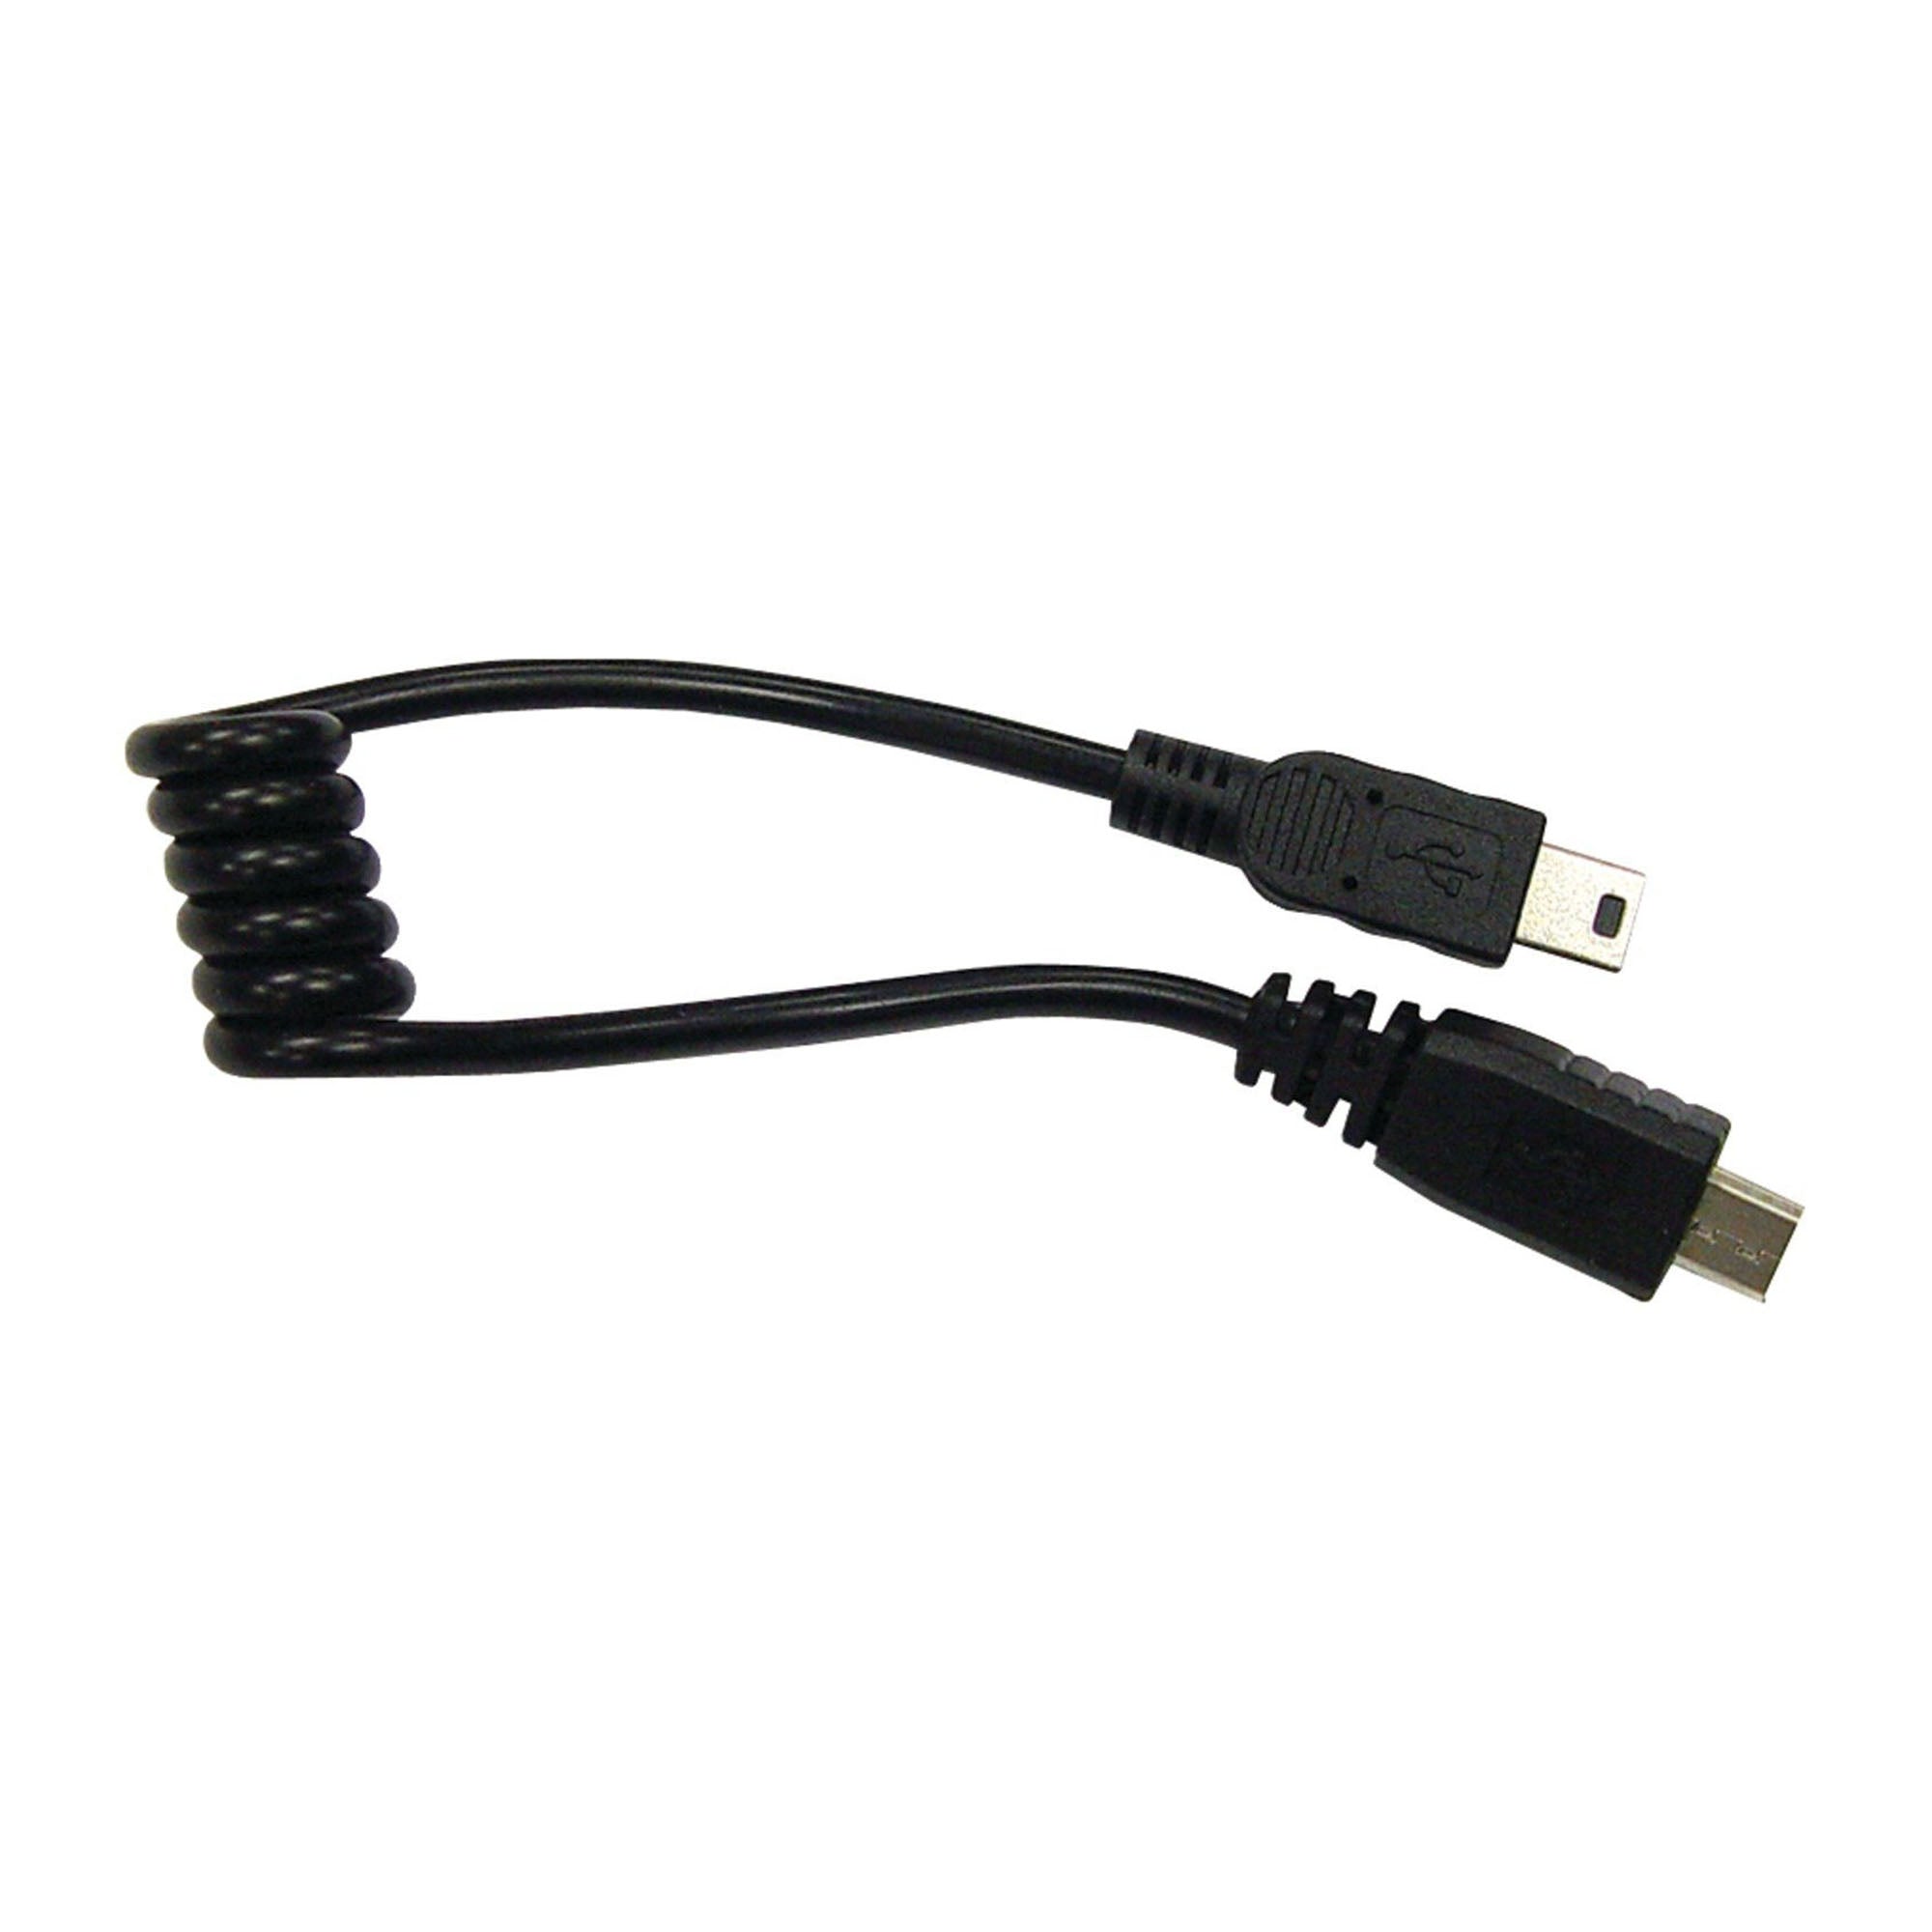 Wilson micro USB charging adapter for Sleek/U-Booster Cradle Amplifier - 690WI859967